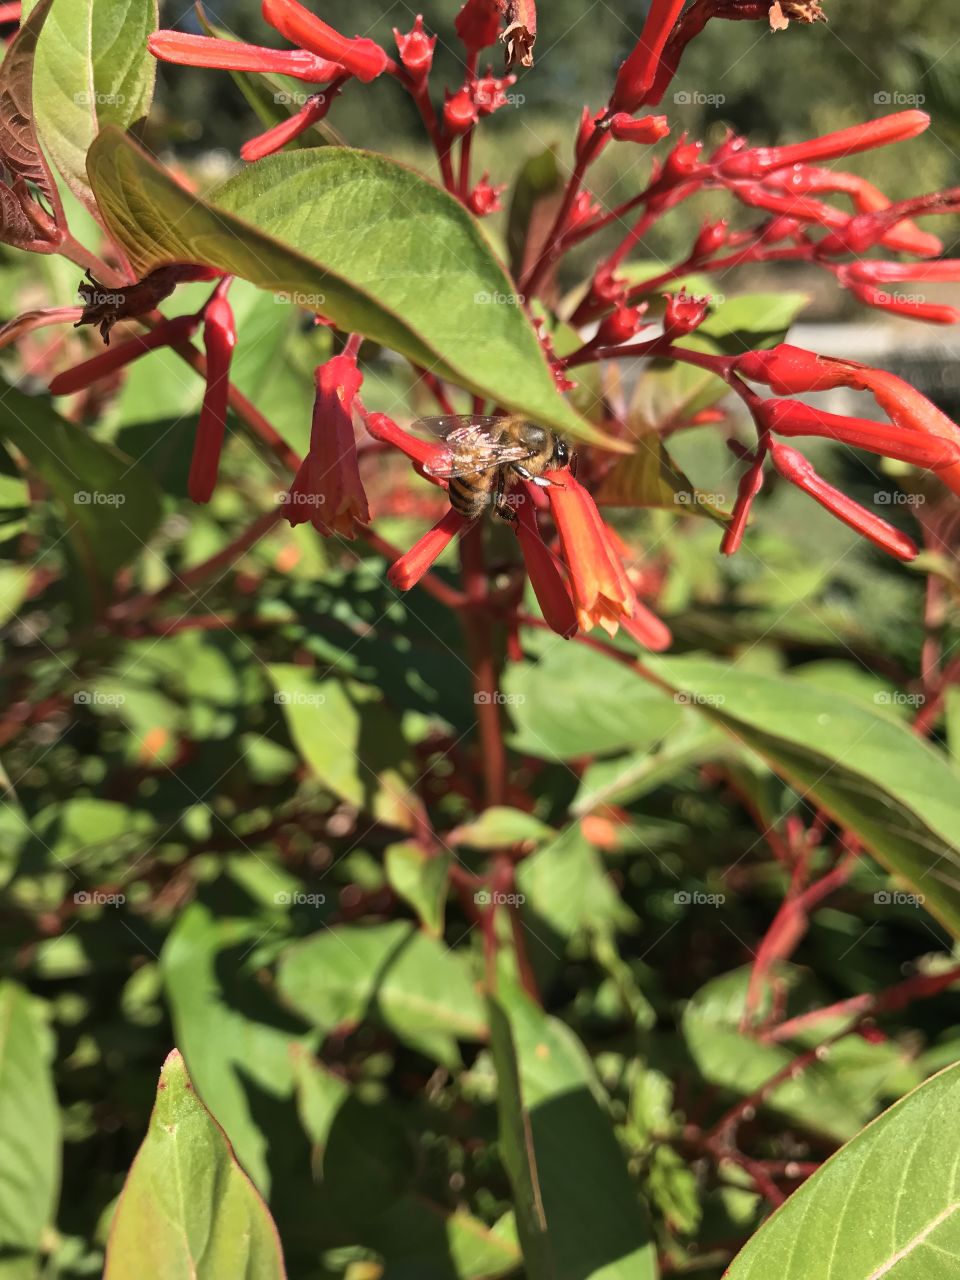 Bees in the Flowers in the garden in San Antonio